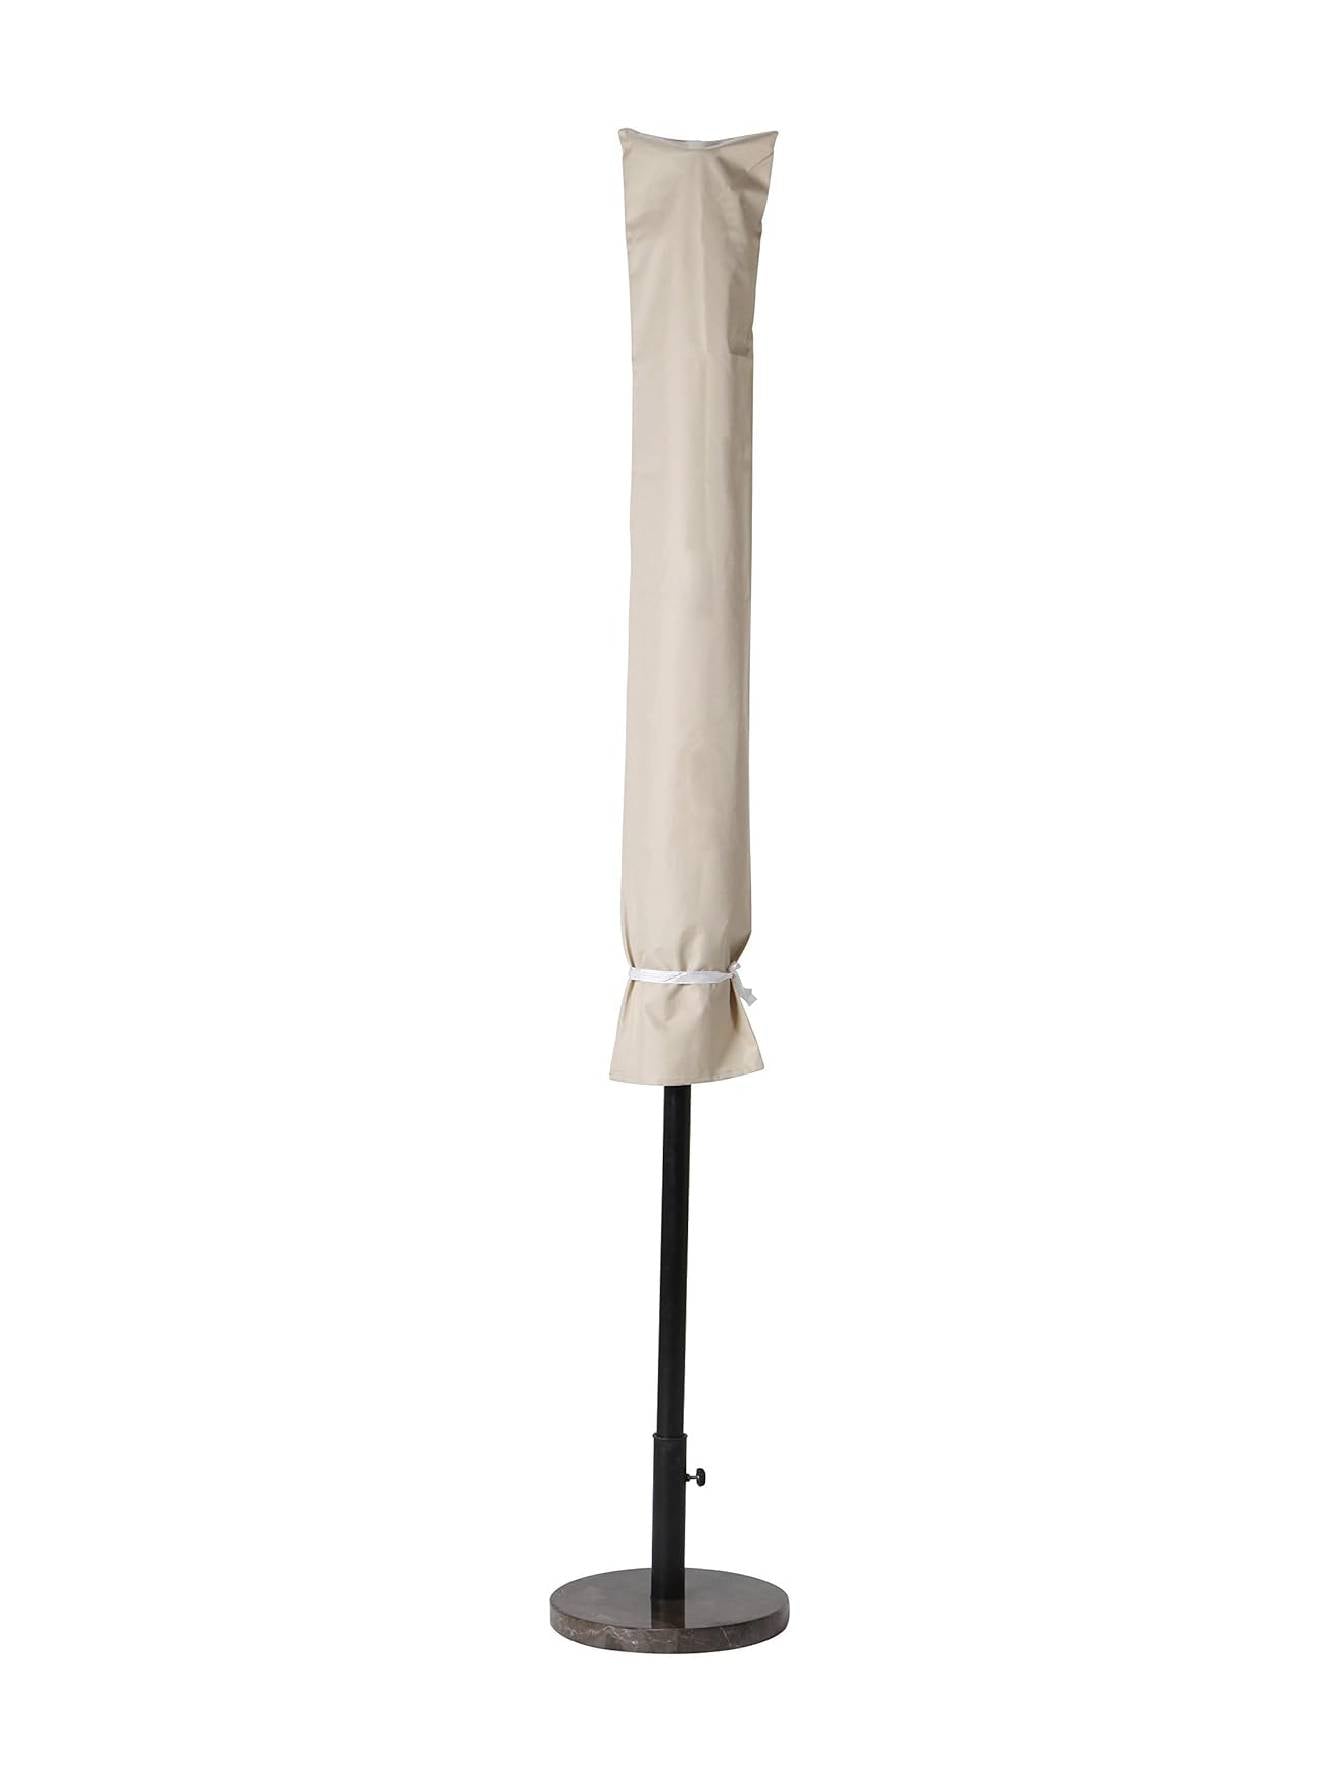 3-meter Upright Umbrella Cover, Outdoor Patio Umbrella Cover Suitable for Cantilevers Offset Umbrella or Large Market Umbrella, Beige